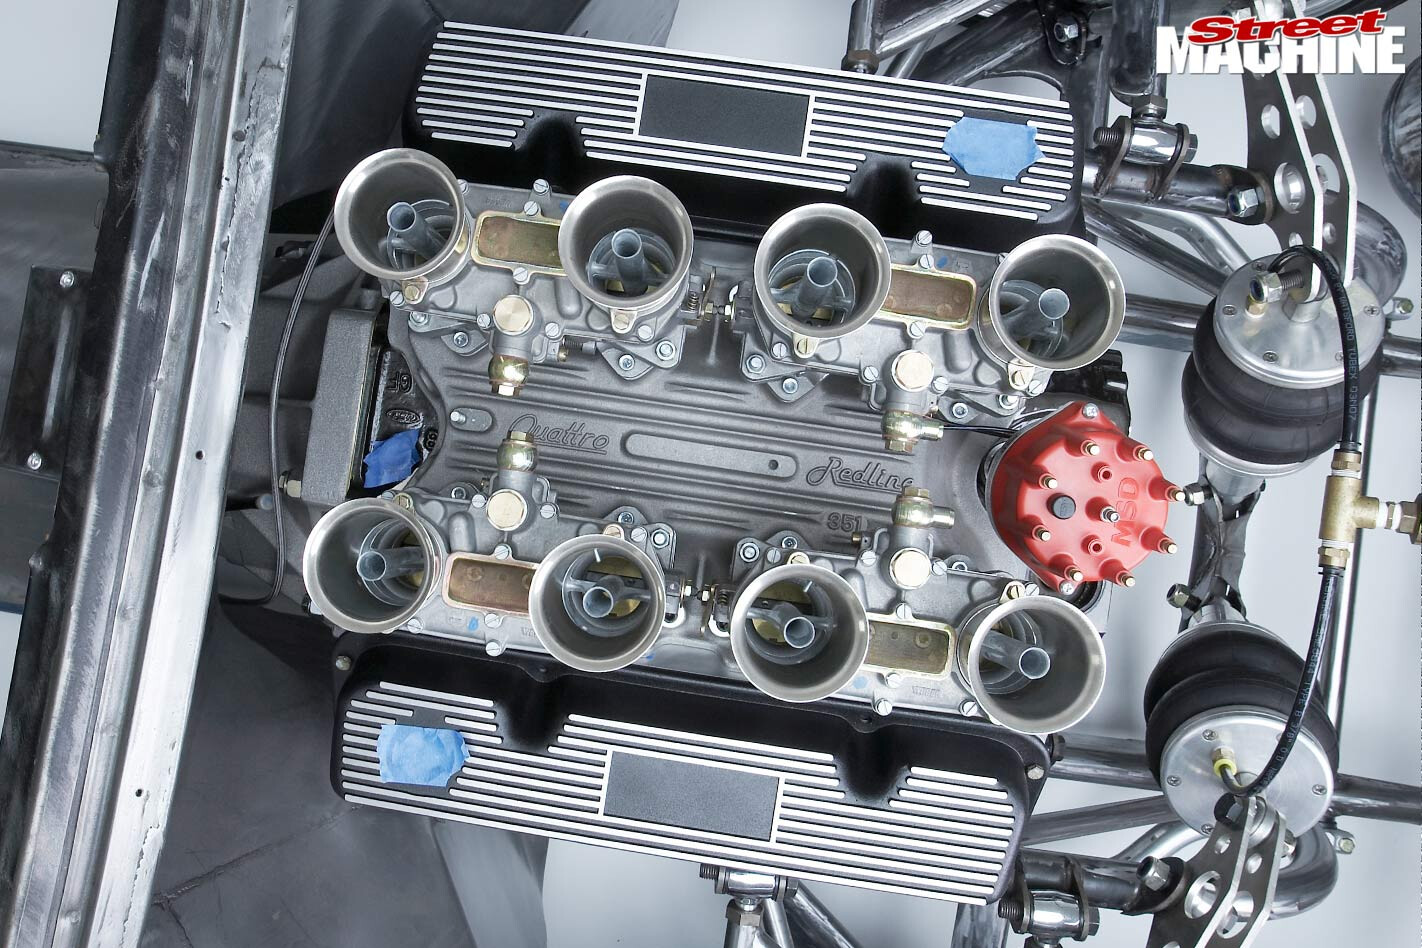 Ford Falcon XC engine